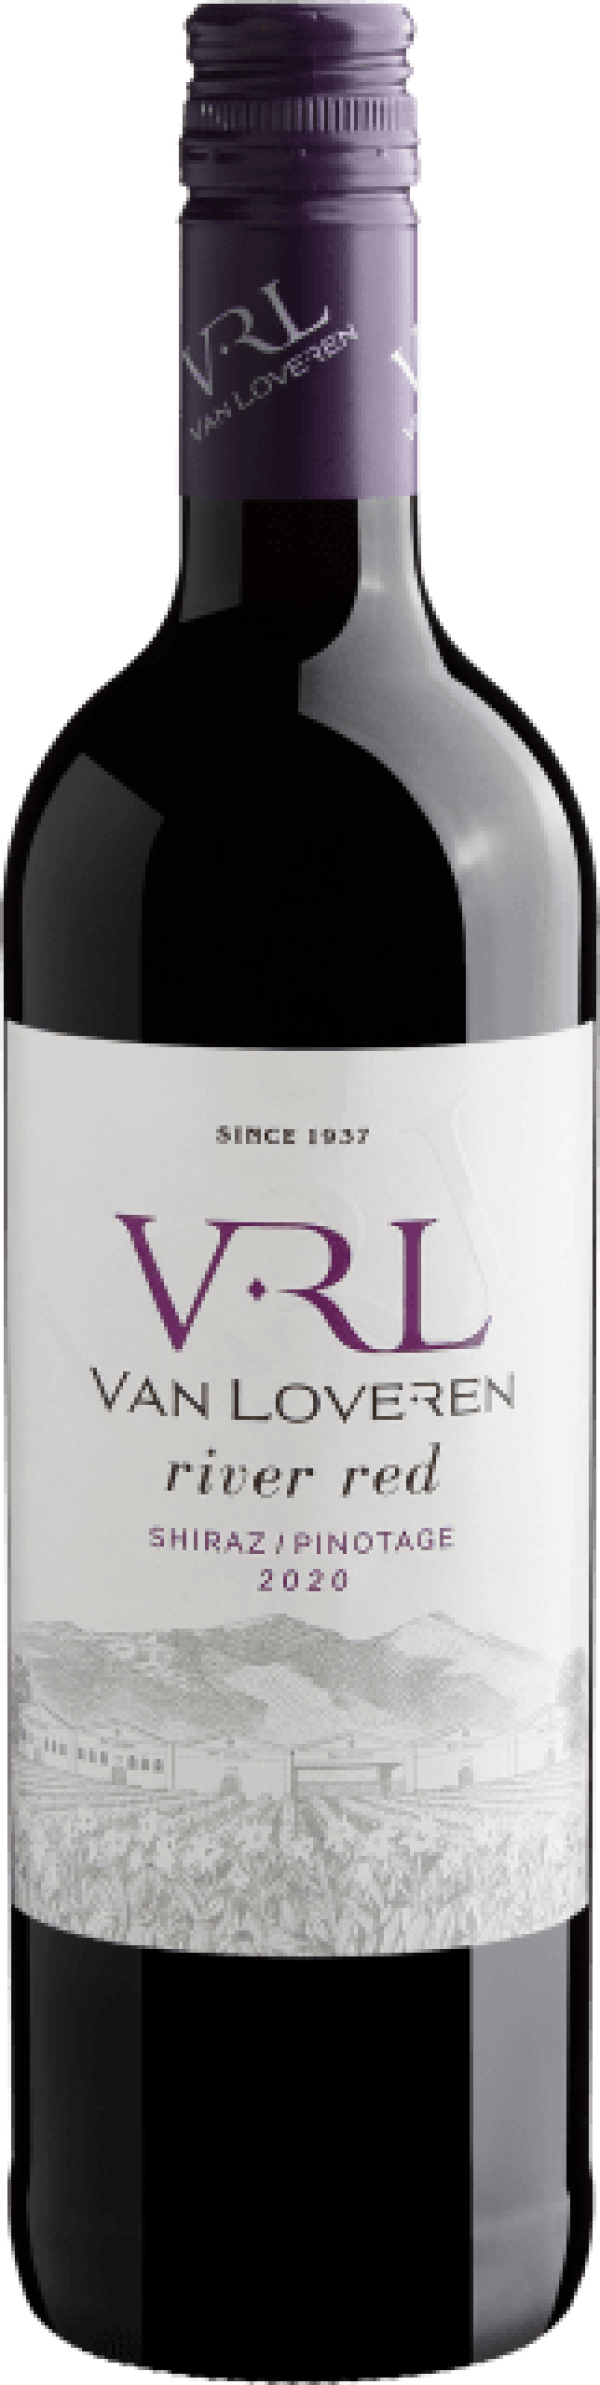 Van Loveren River Red Shiraz / Pinotage Robertson W.O. 2020